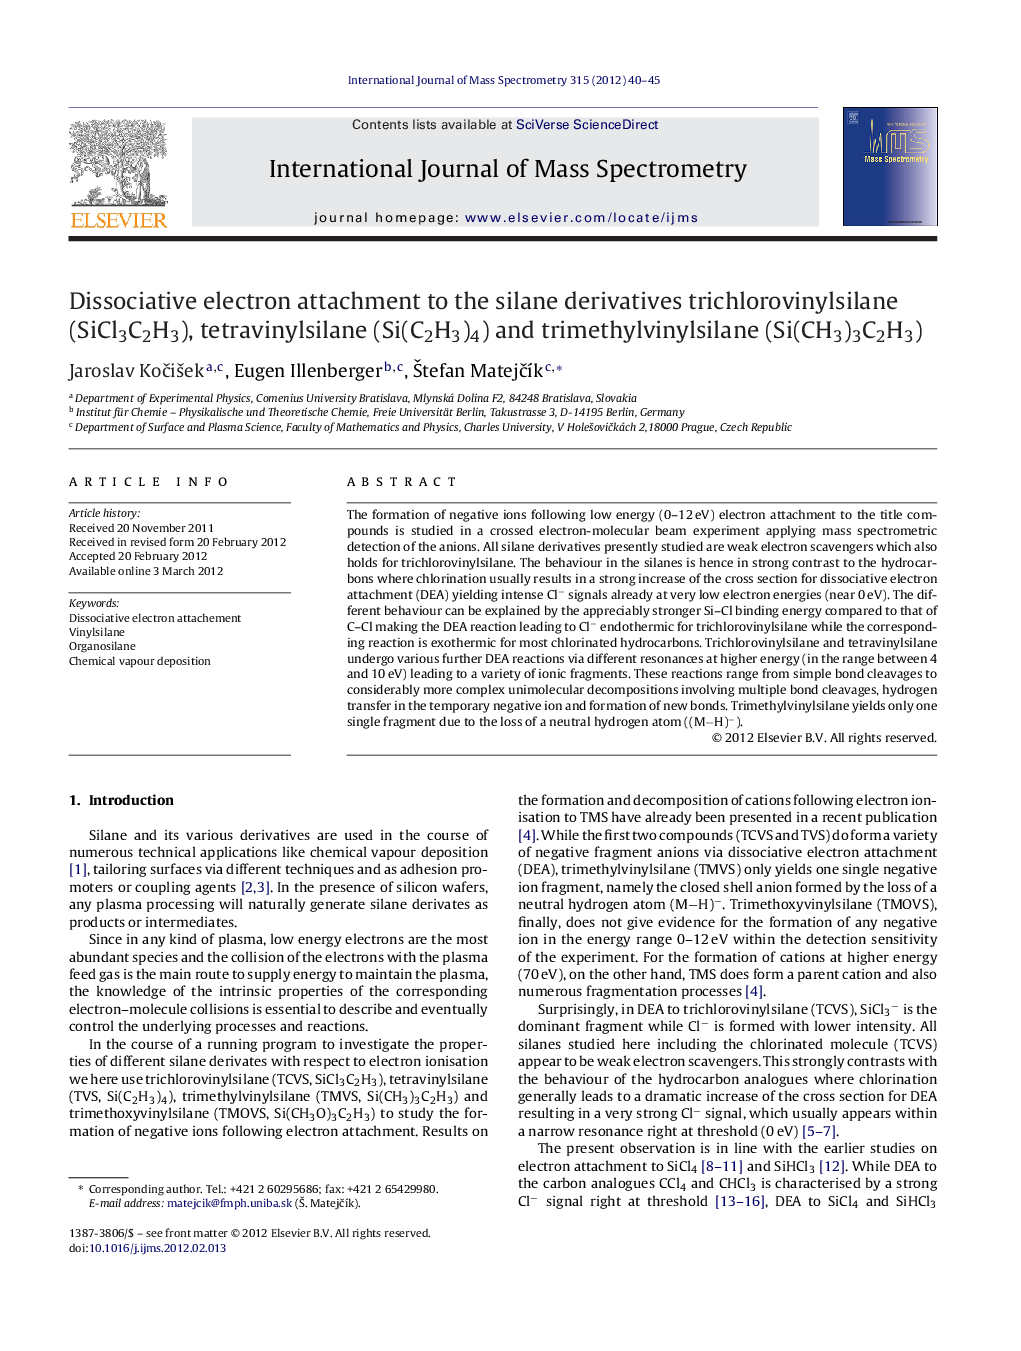 Dissociative electron attachment to the silane derivatives trichlorovinylsilane (SiCl3C2H3), tetravinylsilane (Si(C2H3)4) and trimethylvinylsilane (Si(CH3)3C2H3)